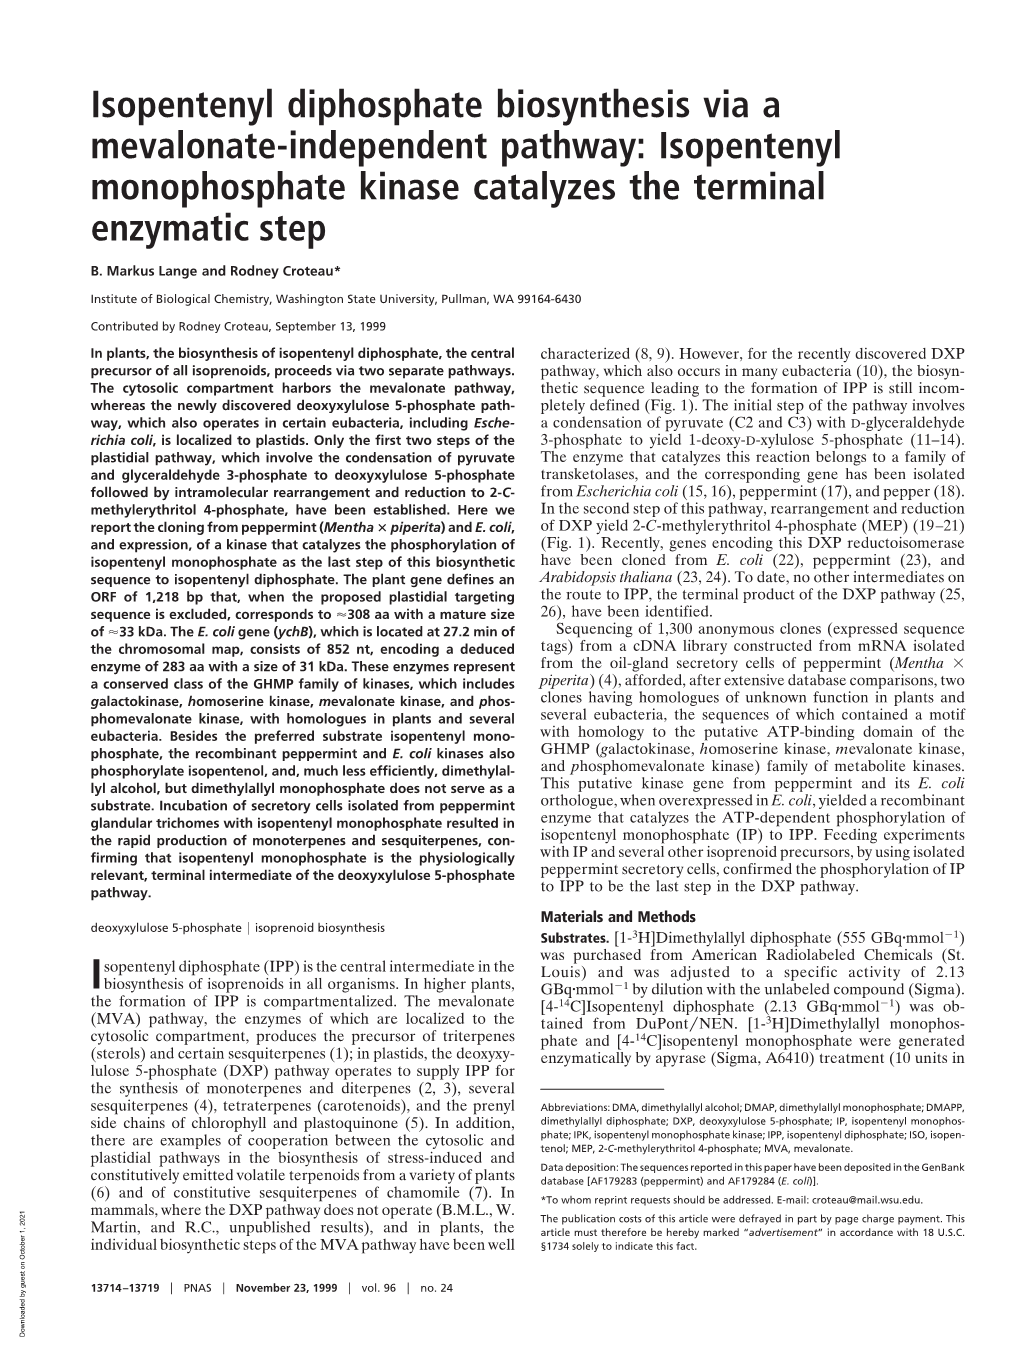 Isopentenyl Monophosphate Kinase Catalyzes the Terminal Enzymatic Step